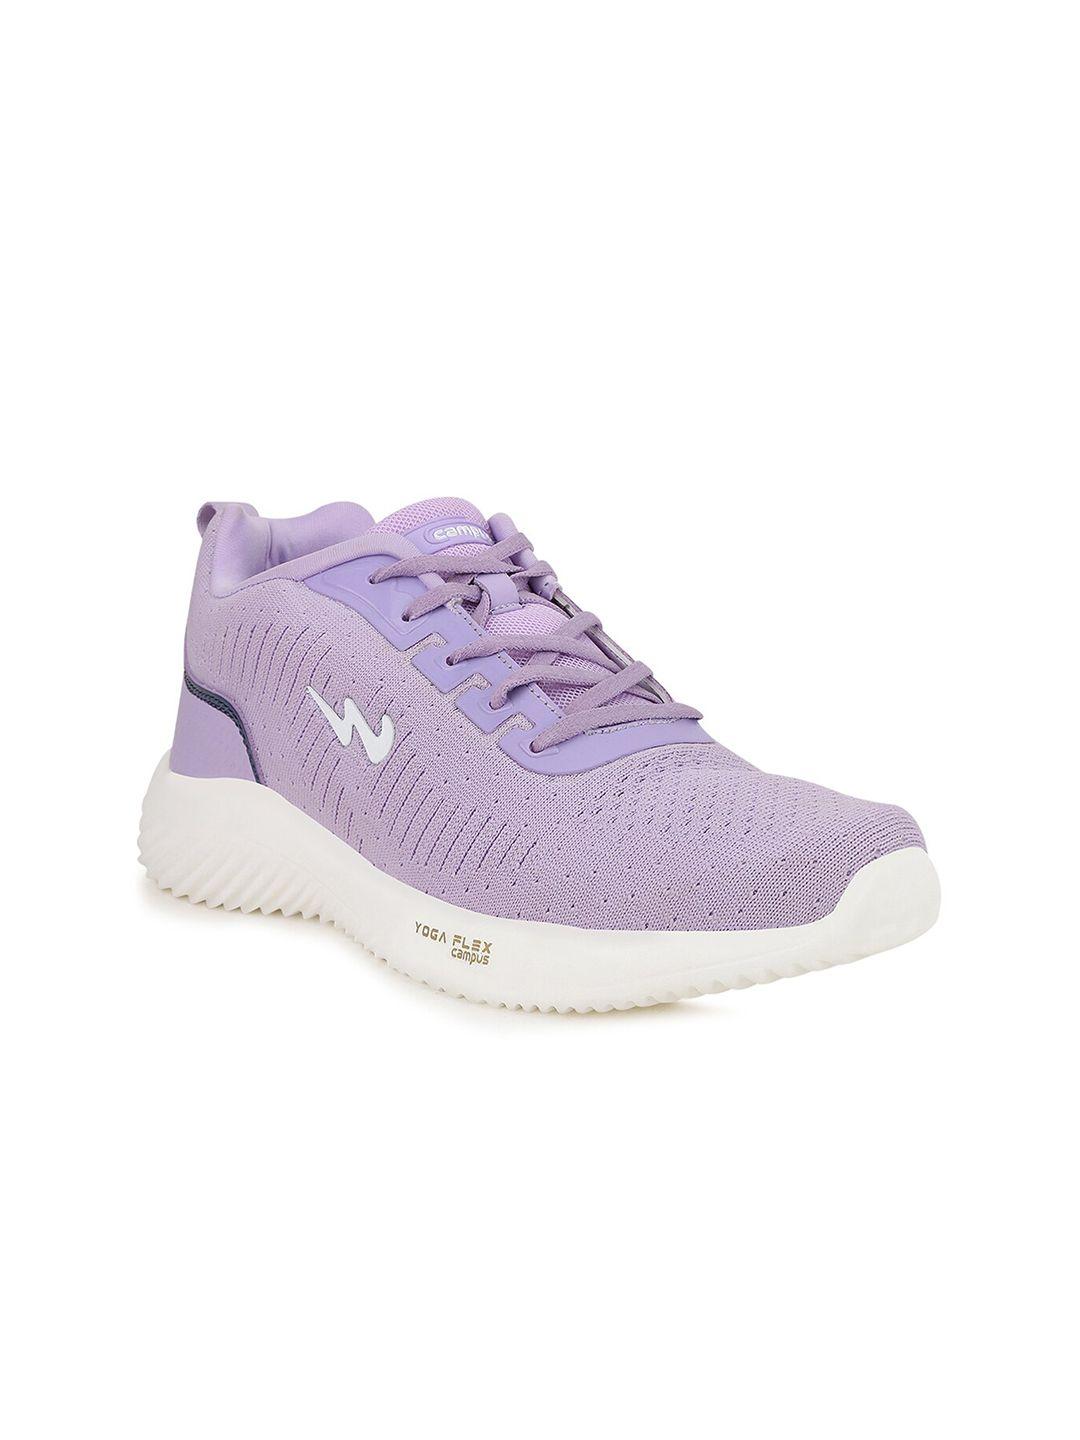 campus women purple mesh running shoes